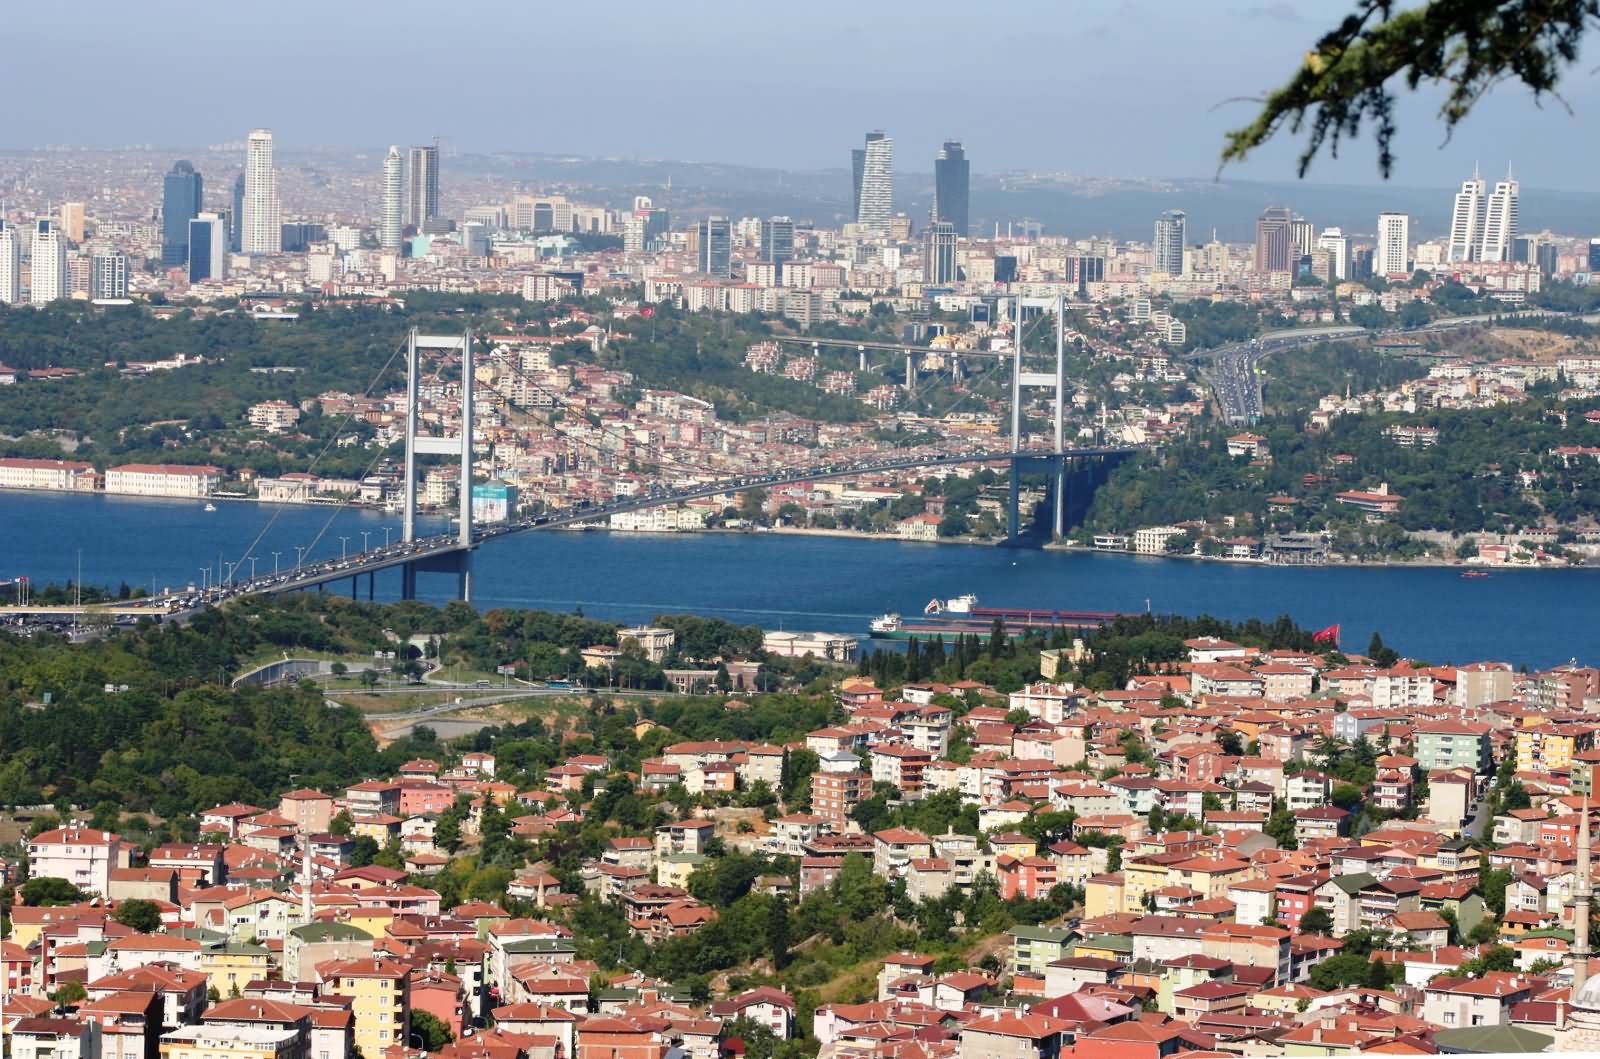 The Bosphorus Bridge And The City View Image